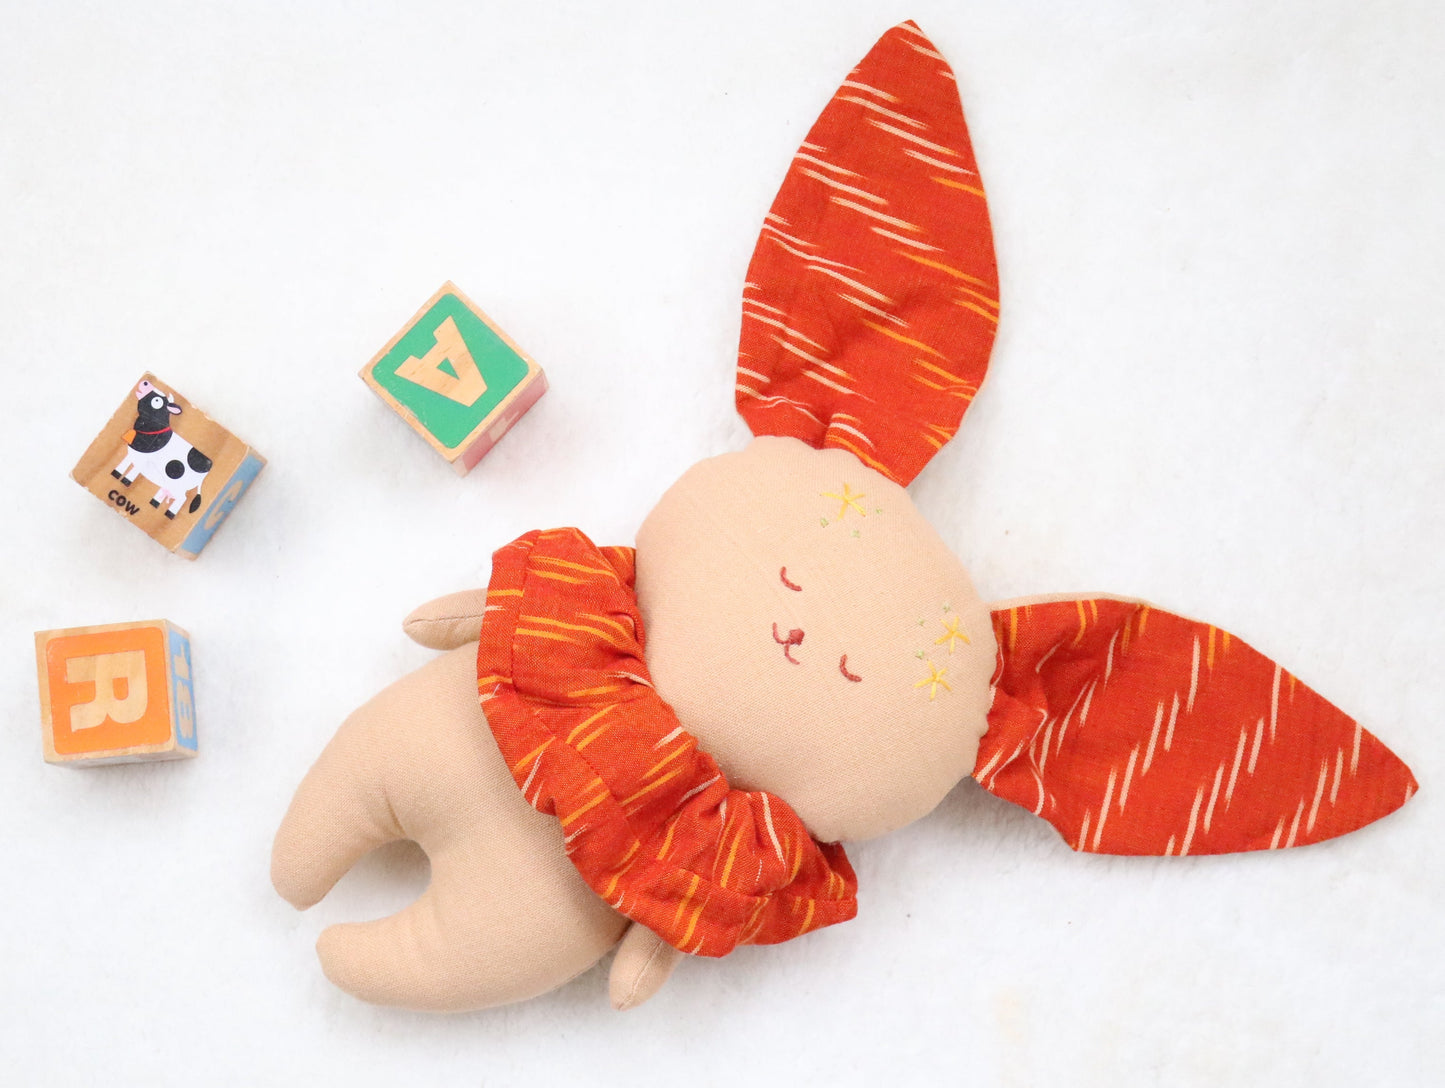 Handmade dolls - Handmade Ikat bunny - Fabric dolls for kids - Hand embroidered stuffed toy